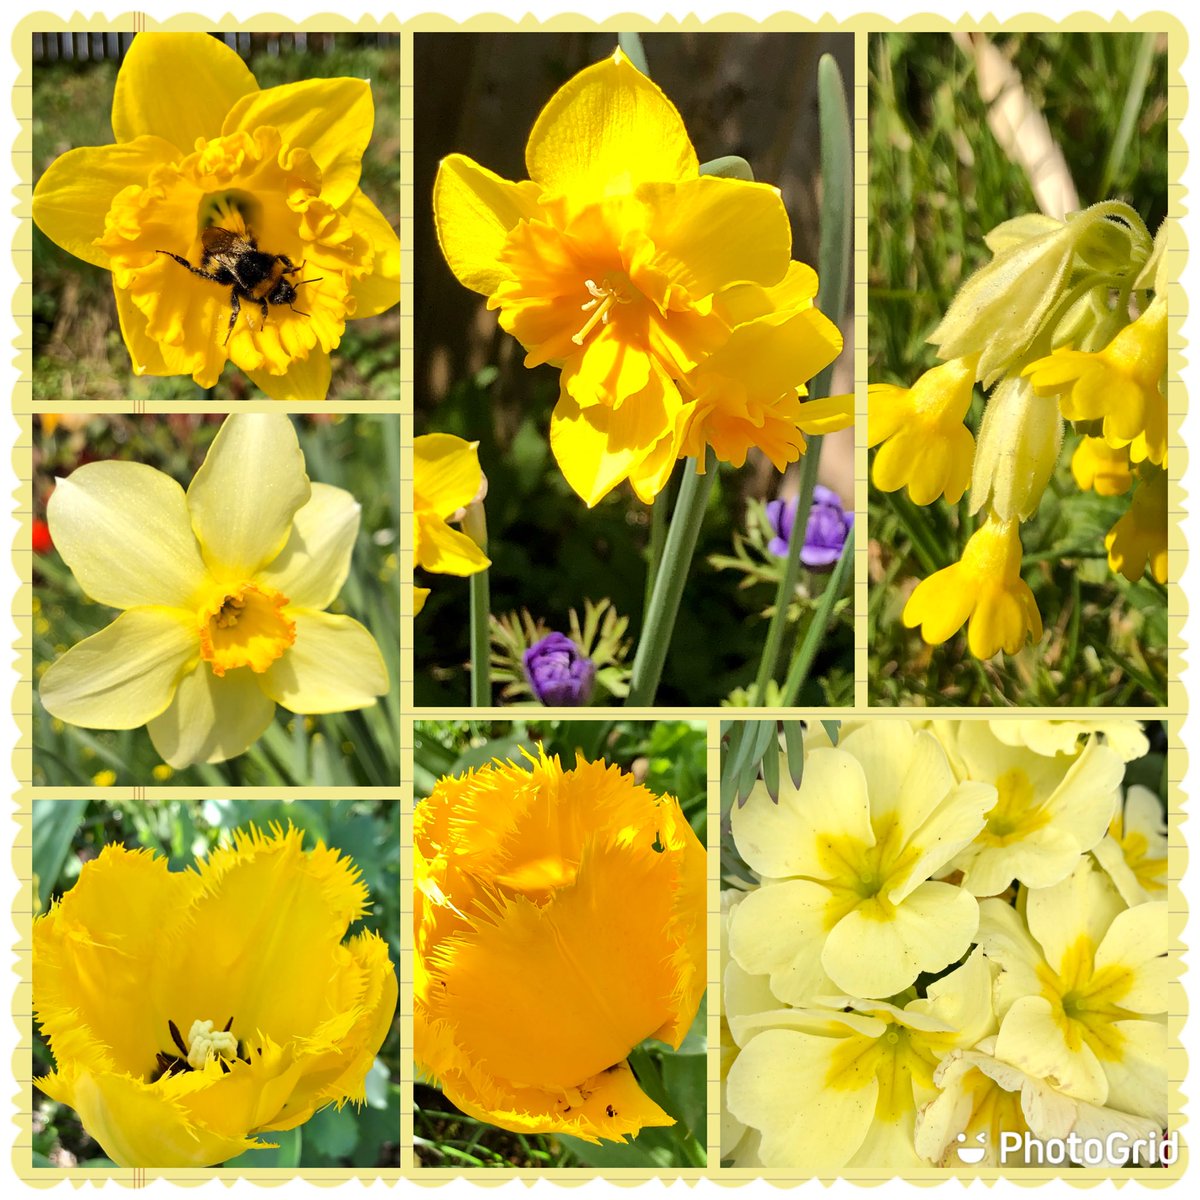 Bright sunshine yellow to look forward to #sundayvibes #SundayYellow #SevenOnSunday #Flowers #gardening #SpringColour